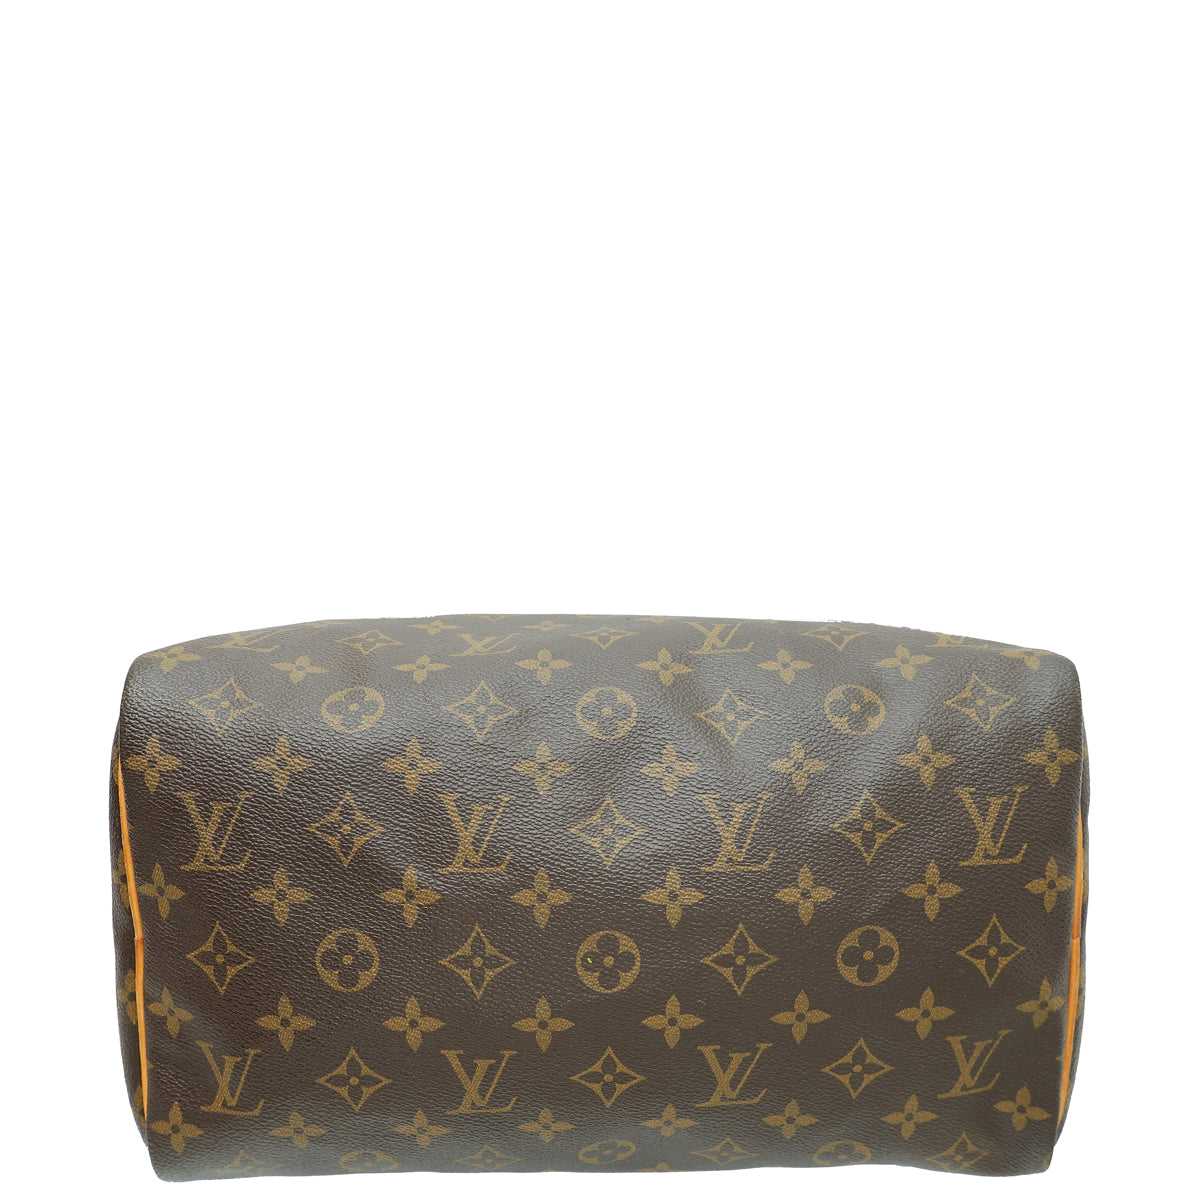 Louis Vuitton Monogram Speedy 30 Bag